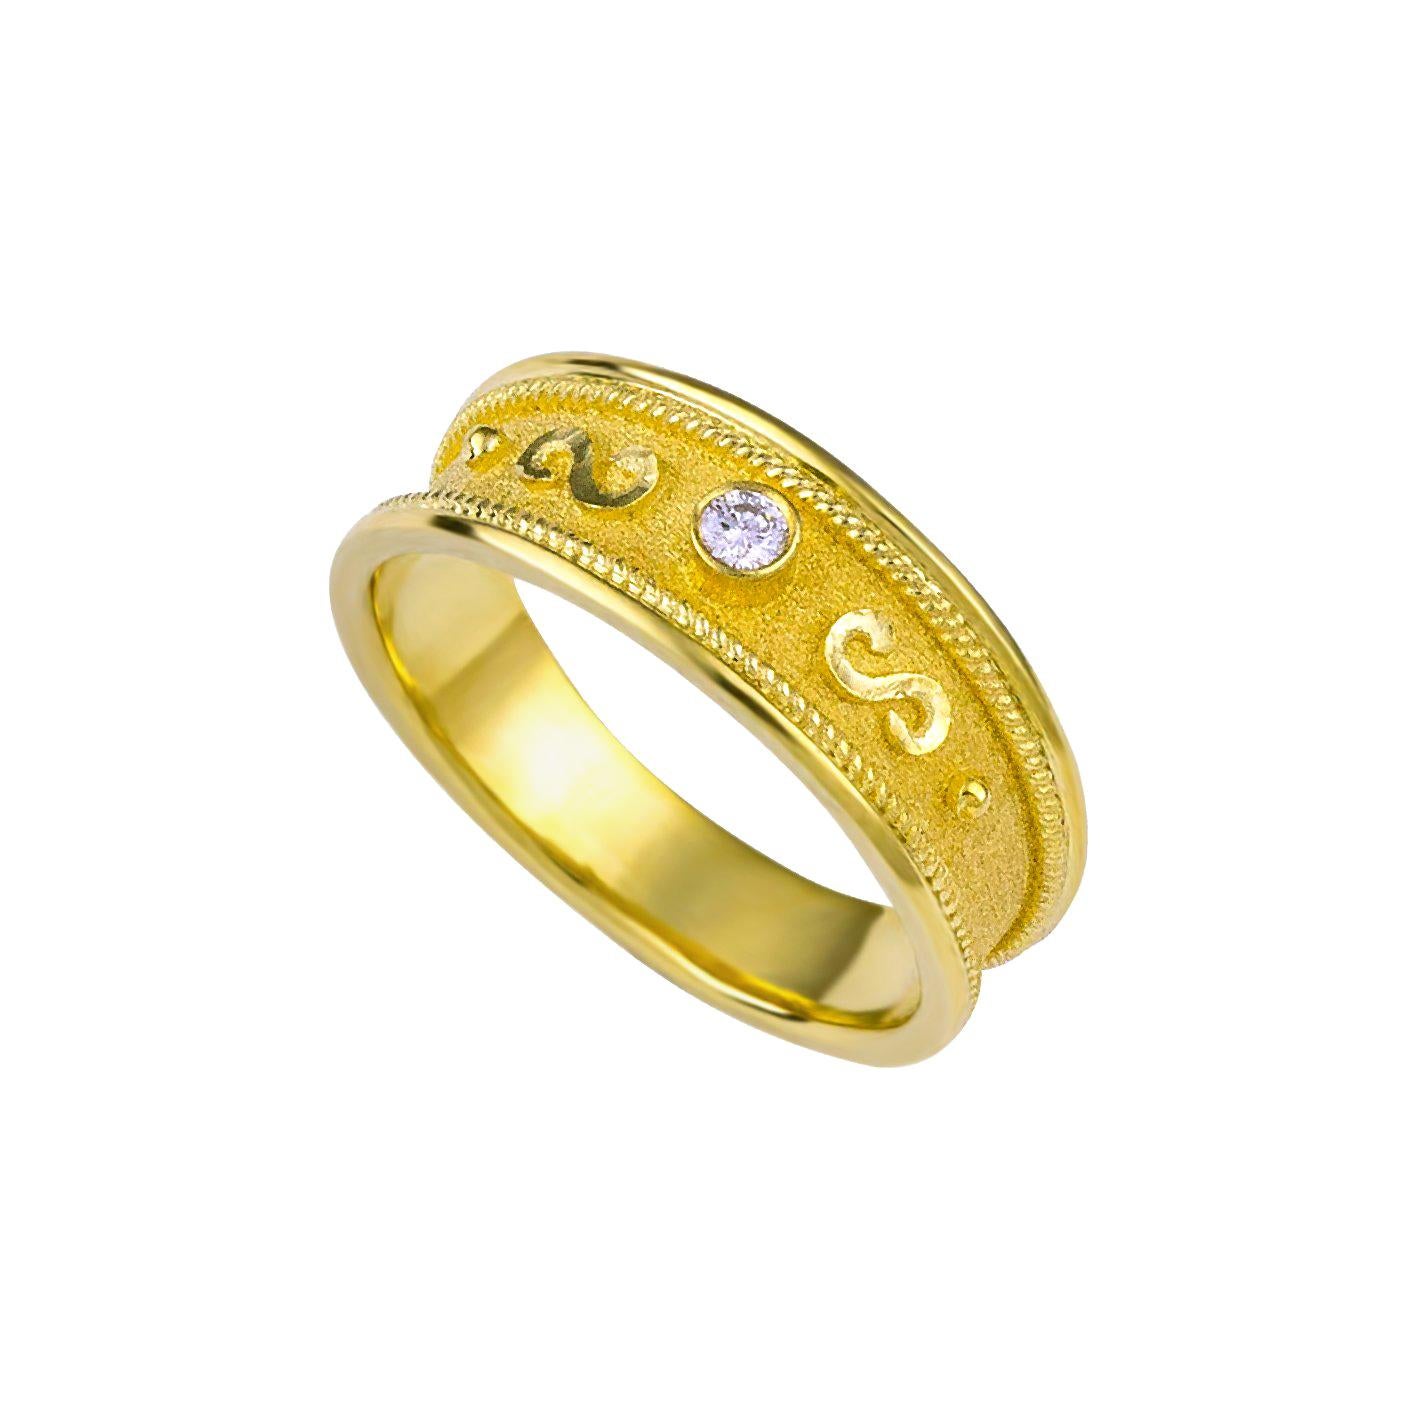 Georgios Collections 18 Karat Yellow Gold Diamond Band Ring with Granulation